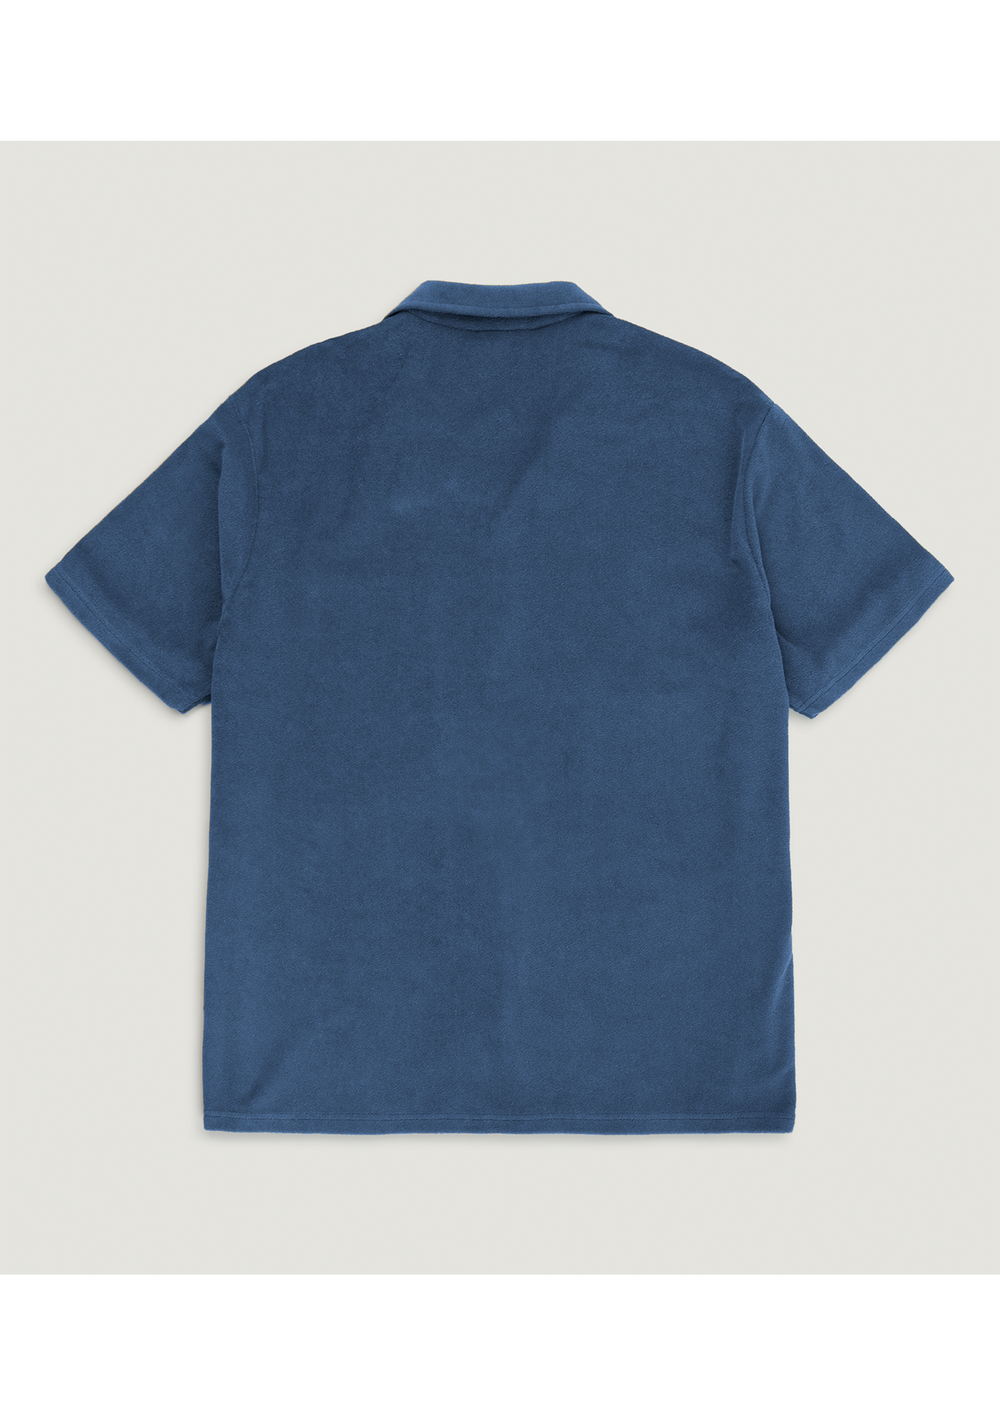 Terry Shirt Blue - BLAW